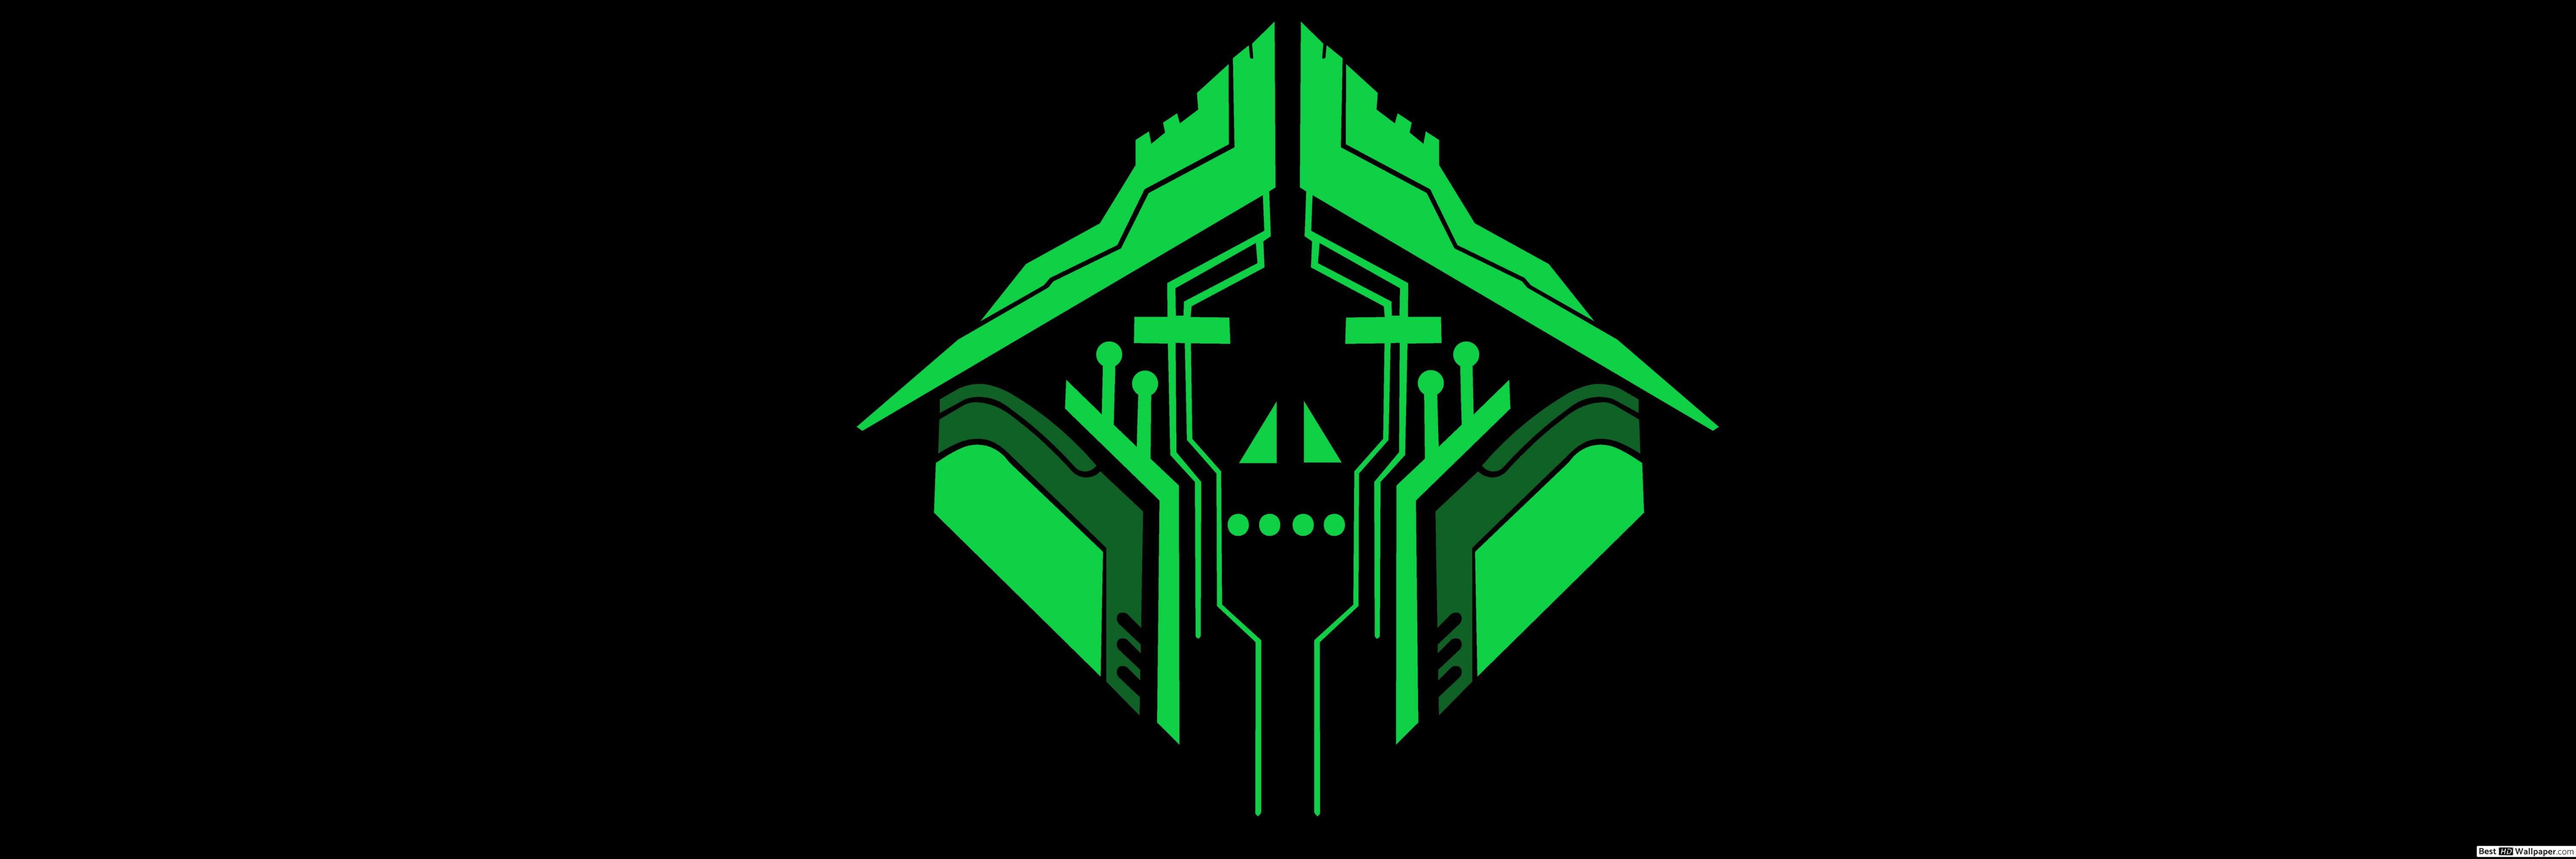 Crypto' Minimalist Logo (8K) Legends (Video Game) HD wallpaper download